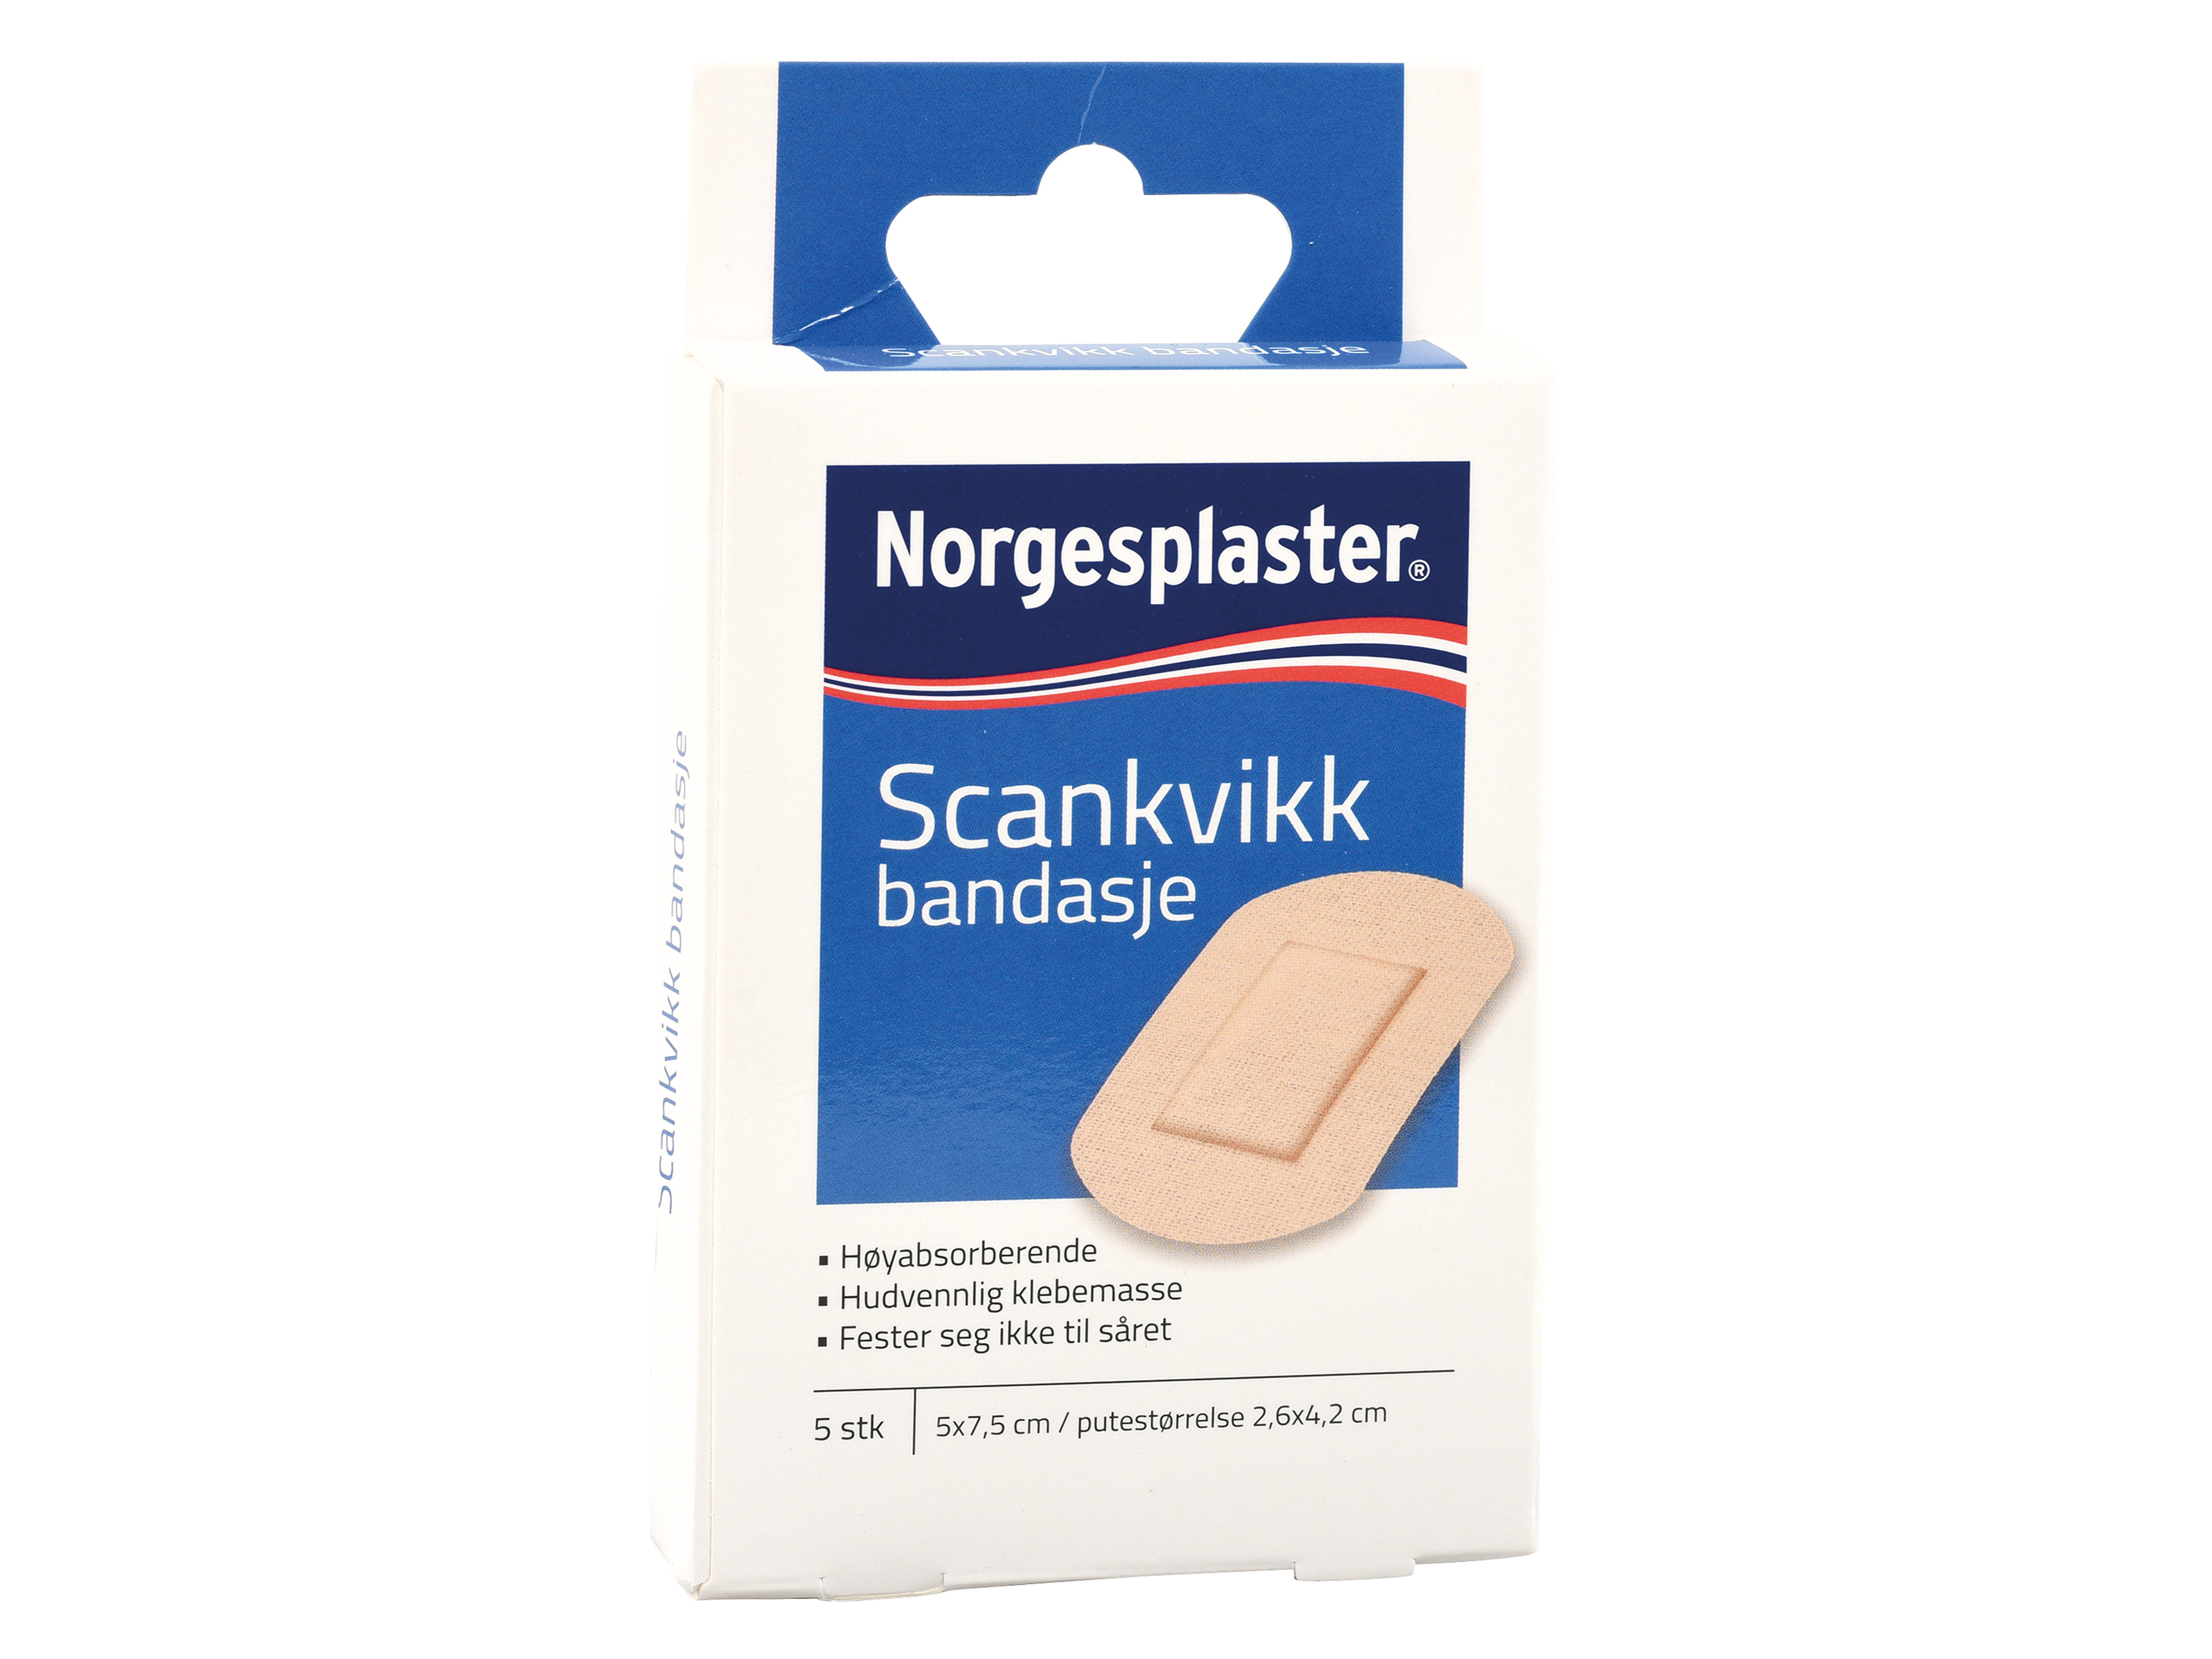 Norgesplaster Norgesplaster Scankvikk bandasje beige, 5x7,5 cm, 5 stk.